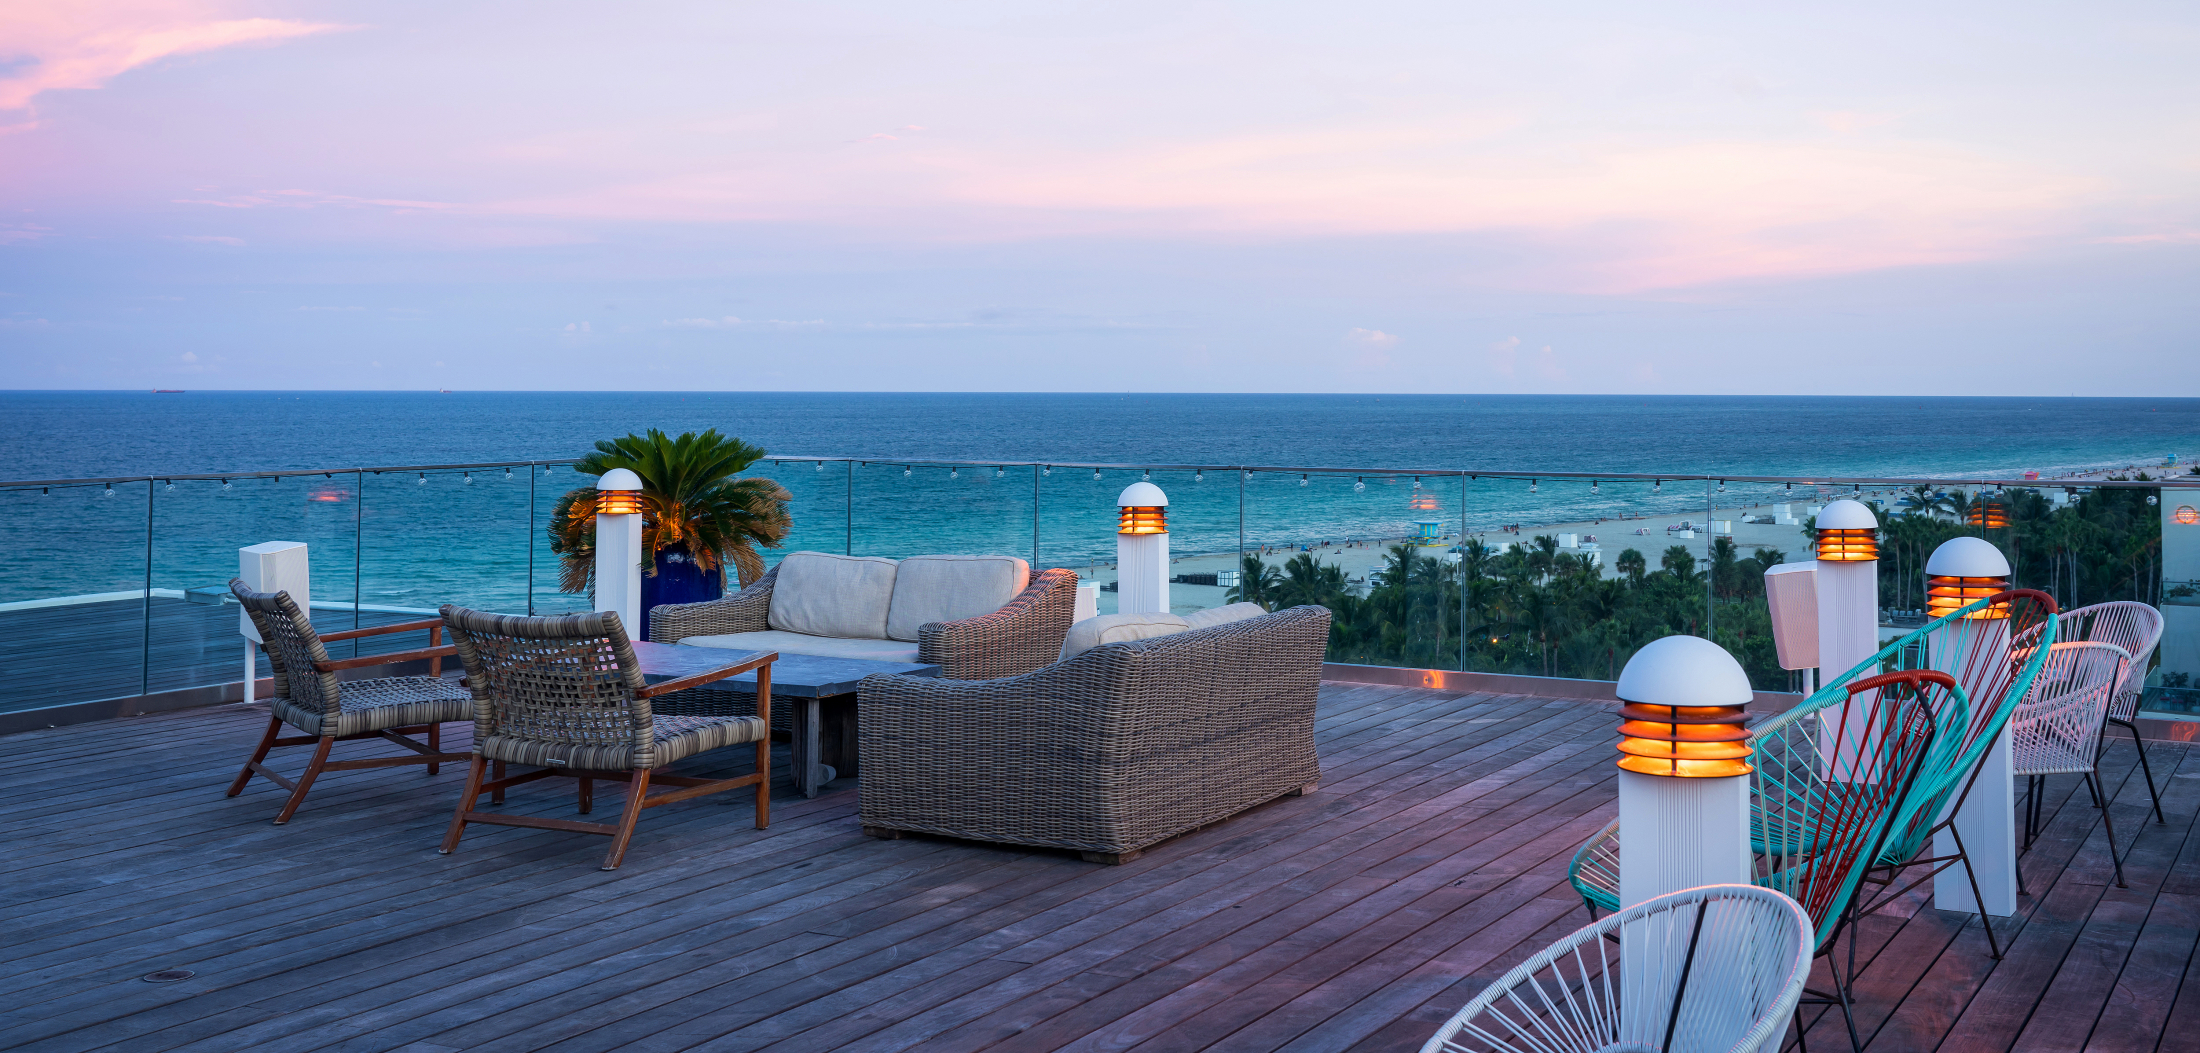 Ocean Terrace lounge area with ocean in background